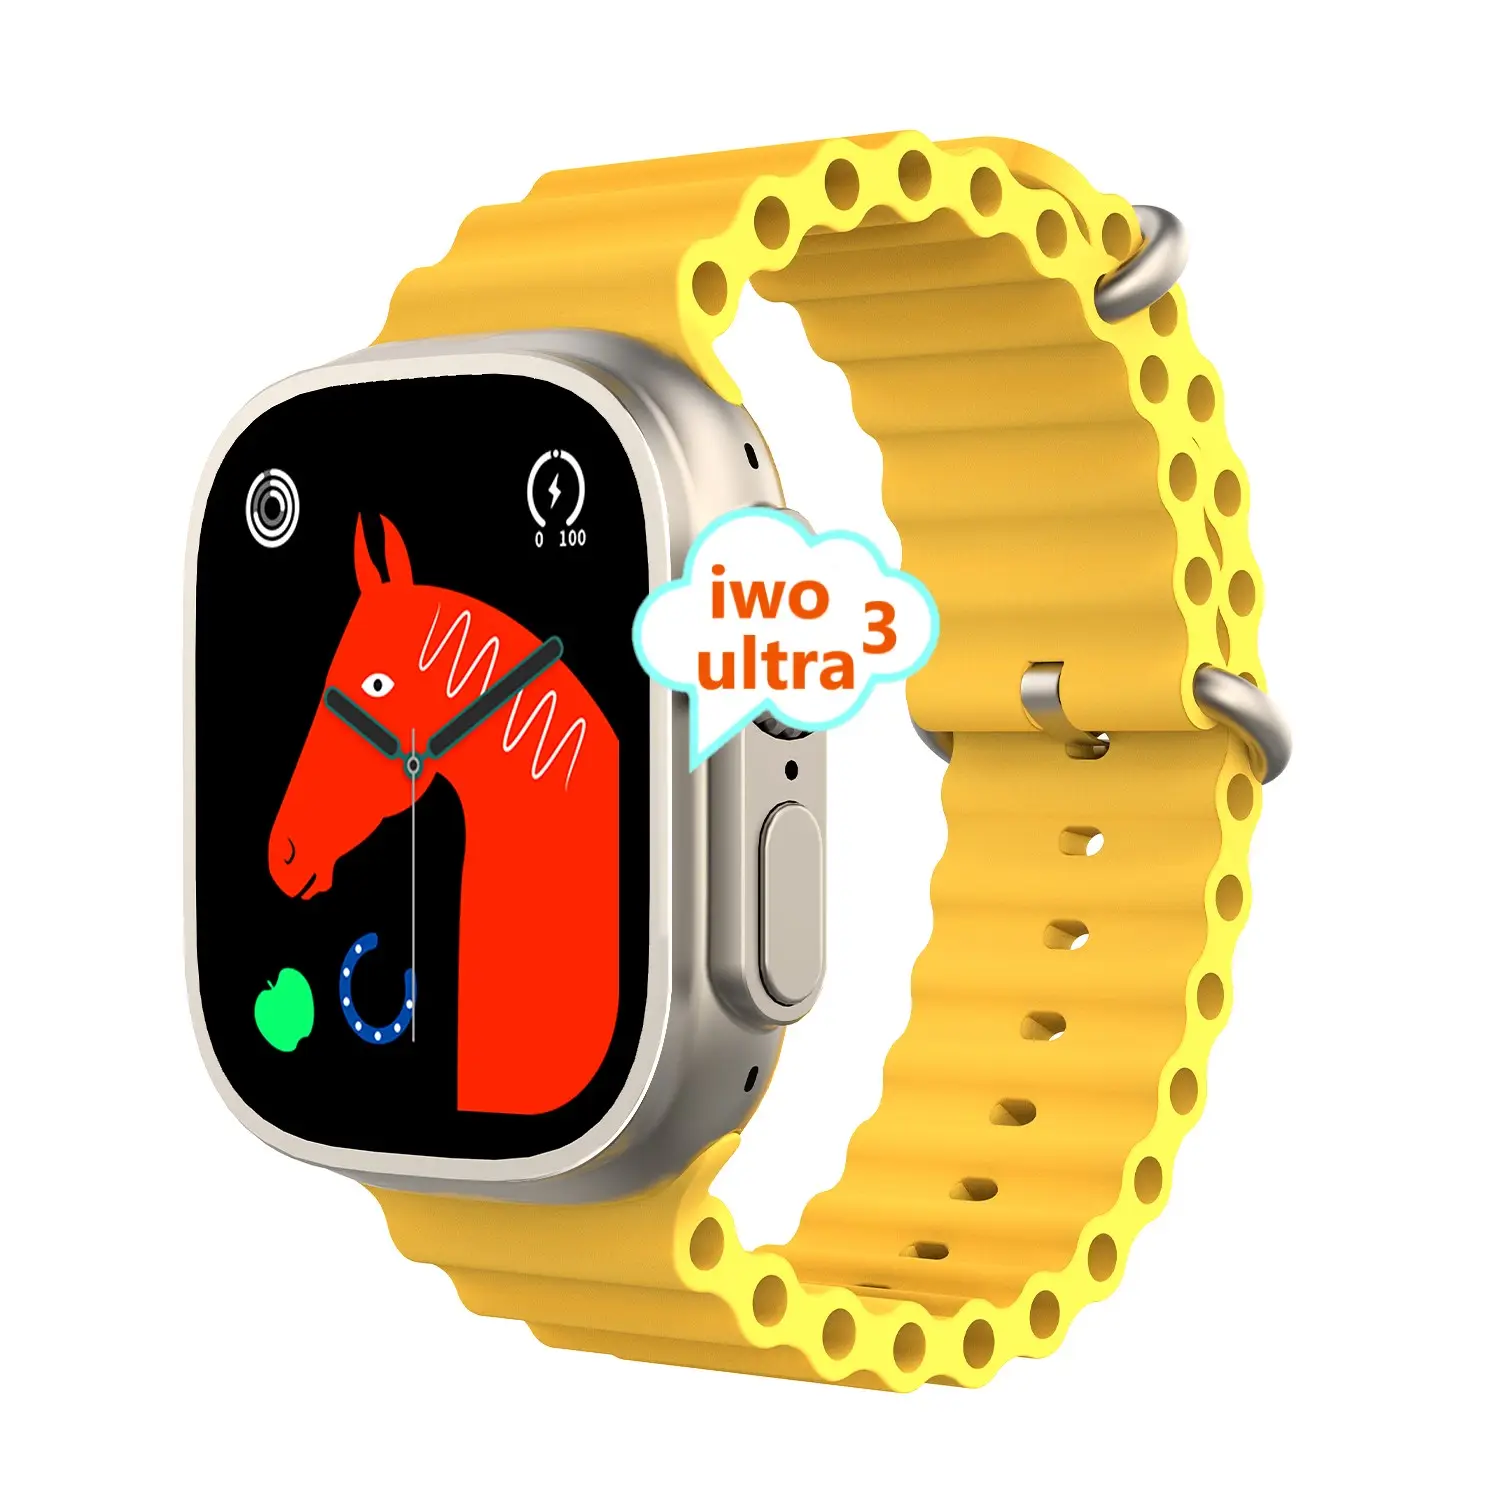 Top iwo ultra 3 smartwatch 2.2" retina high-definition durable screen 49mm smart watch iwoultra iwo ultra 3 with compass games